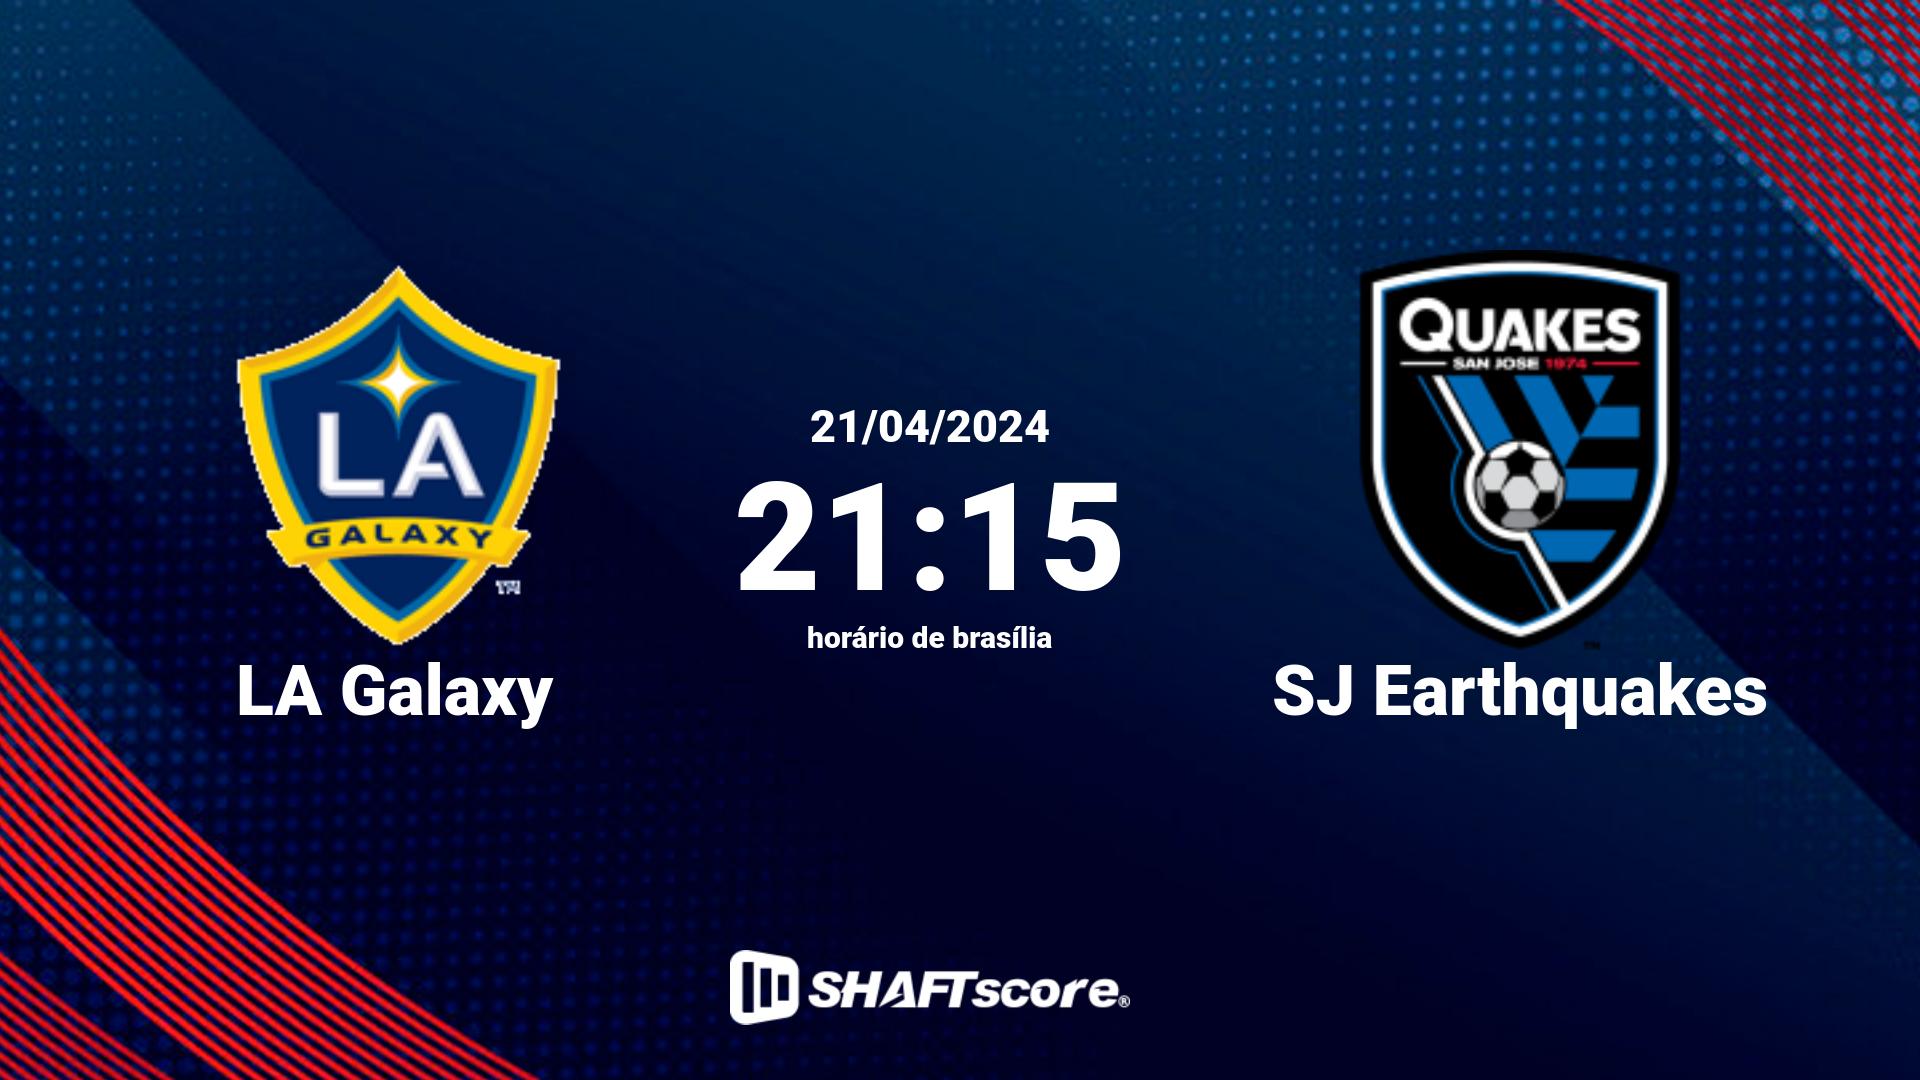 Estatísticas do jogo LA Galaxy vs SJ Earthquakes 21.04 21:15